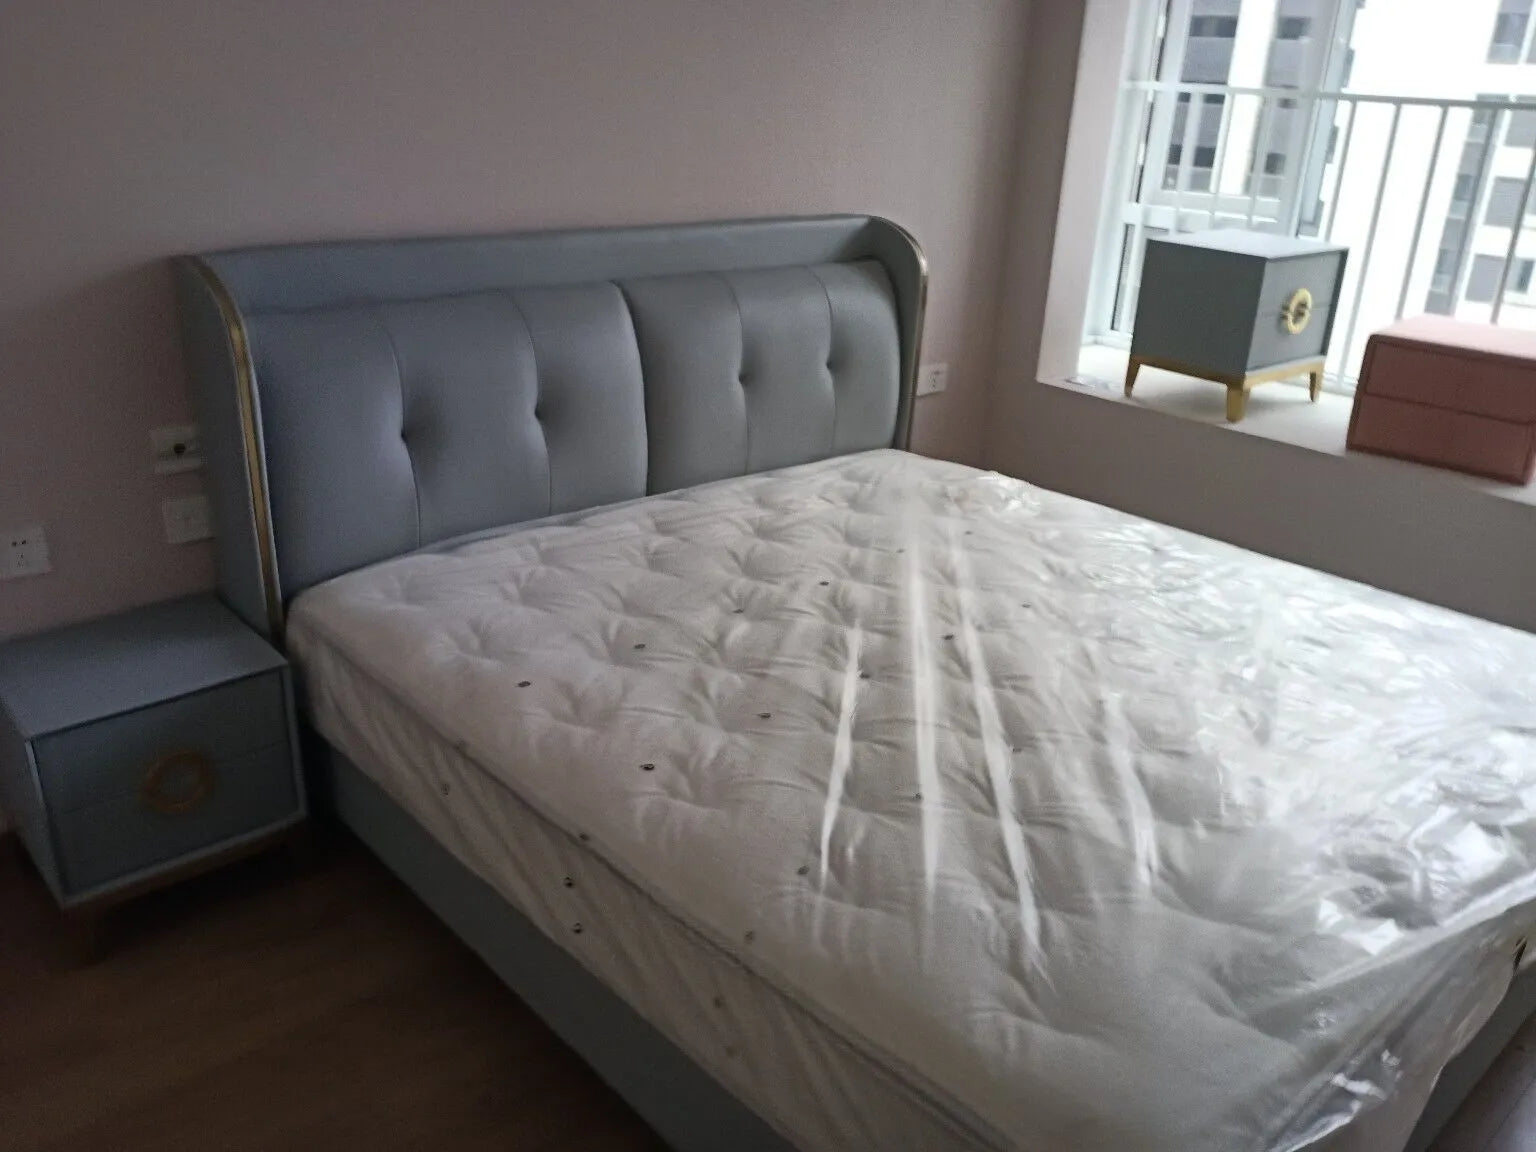 Genuine Leather multifunctional bed frame modern Nordic camas rectangle ultimate bed  кровать двуспальная lit beds سرير  muebles